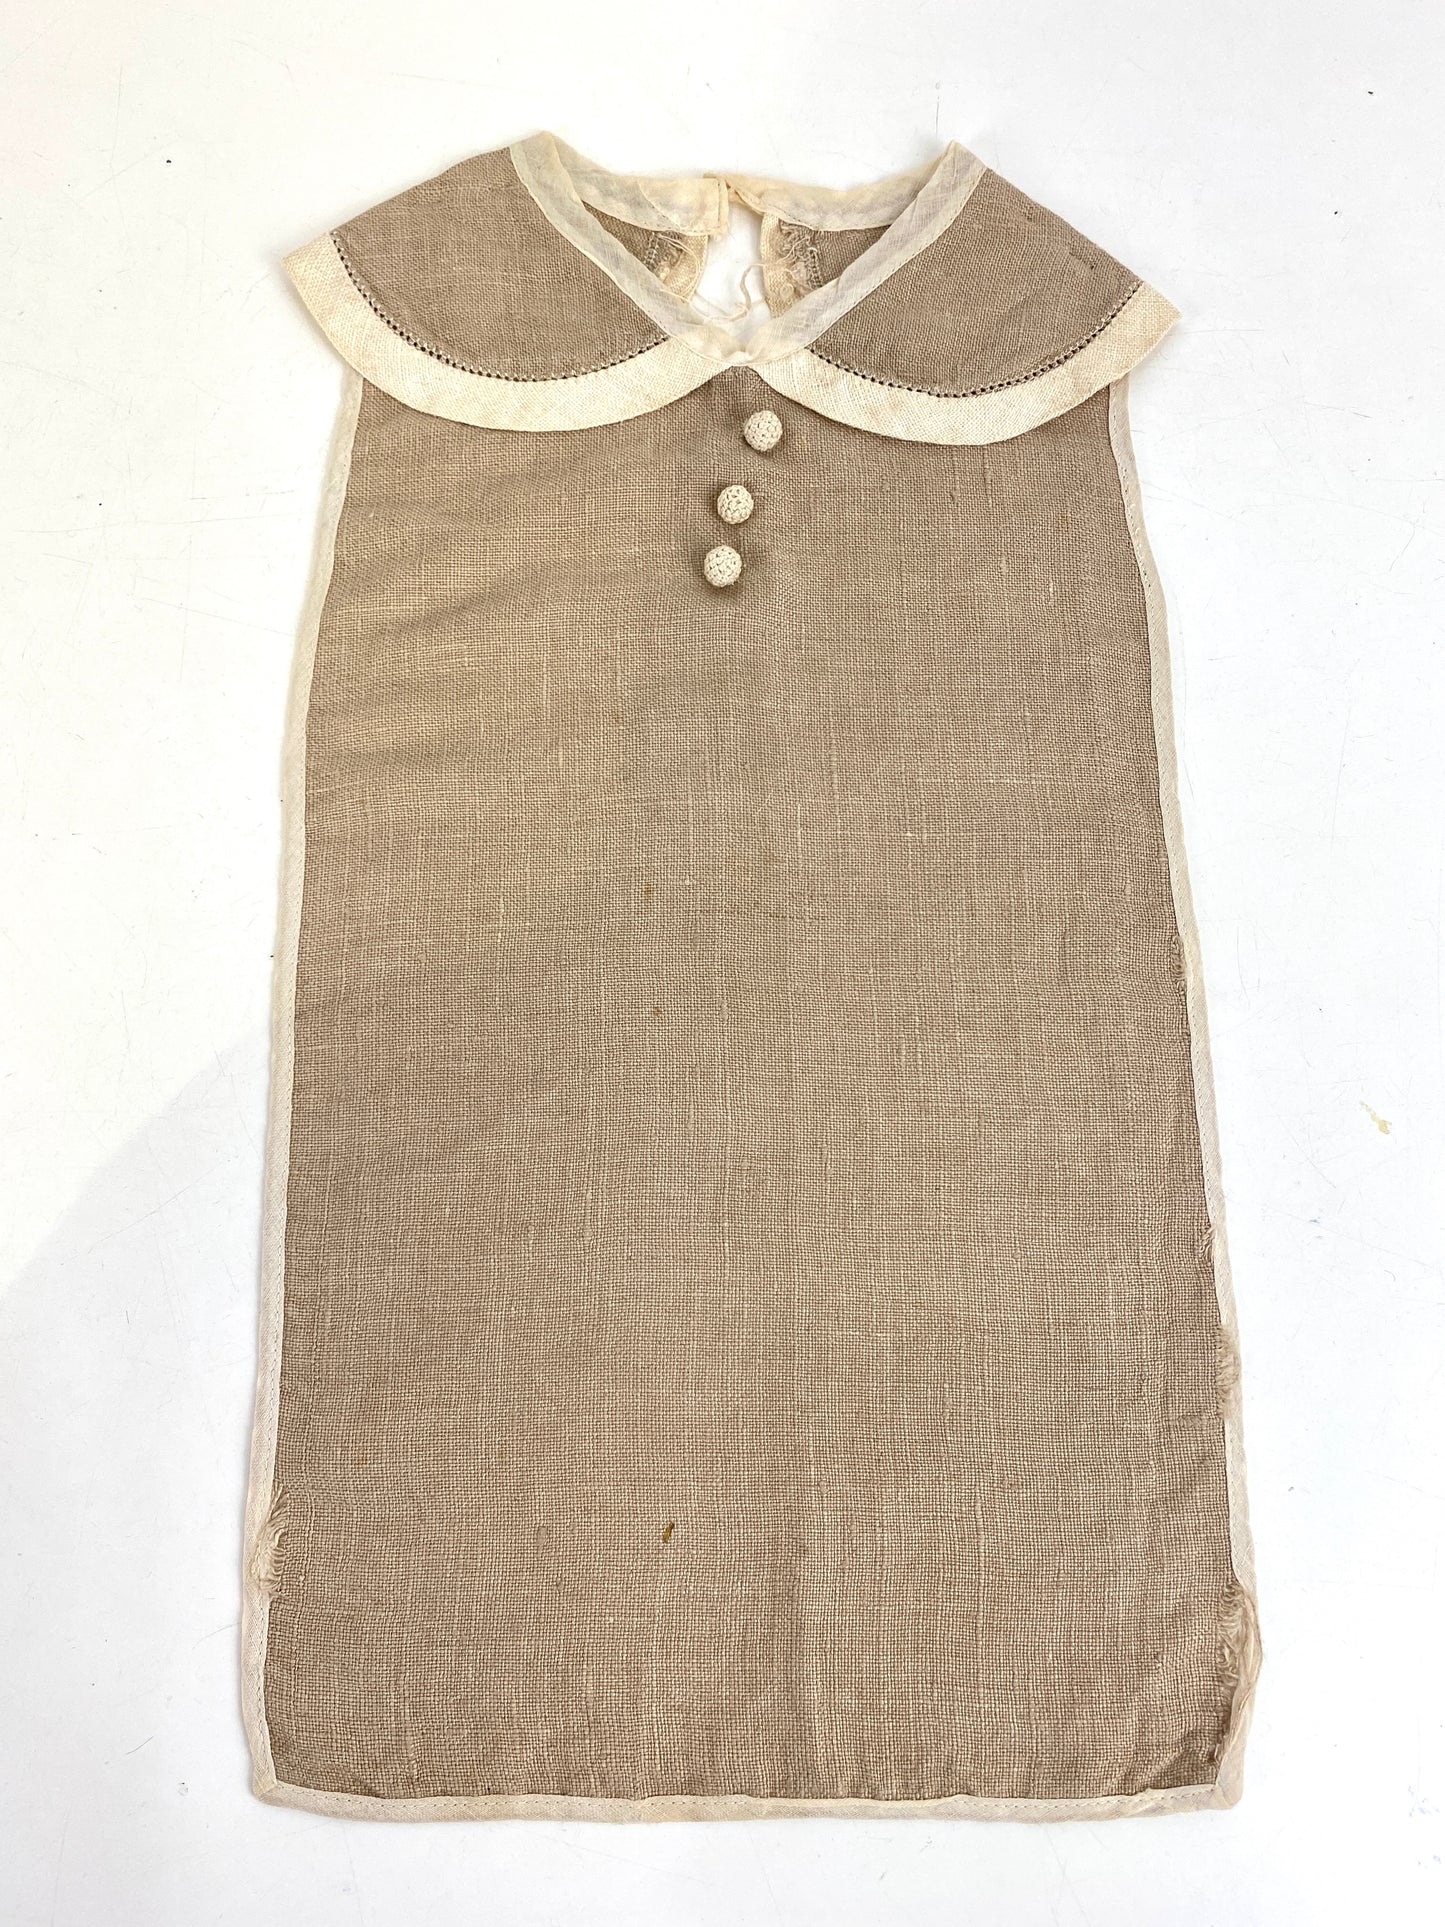 Vintage 1920s Brown Linen Bib with Peter Pan Collar